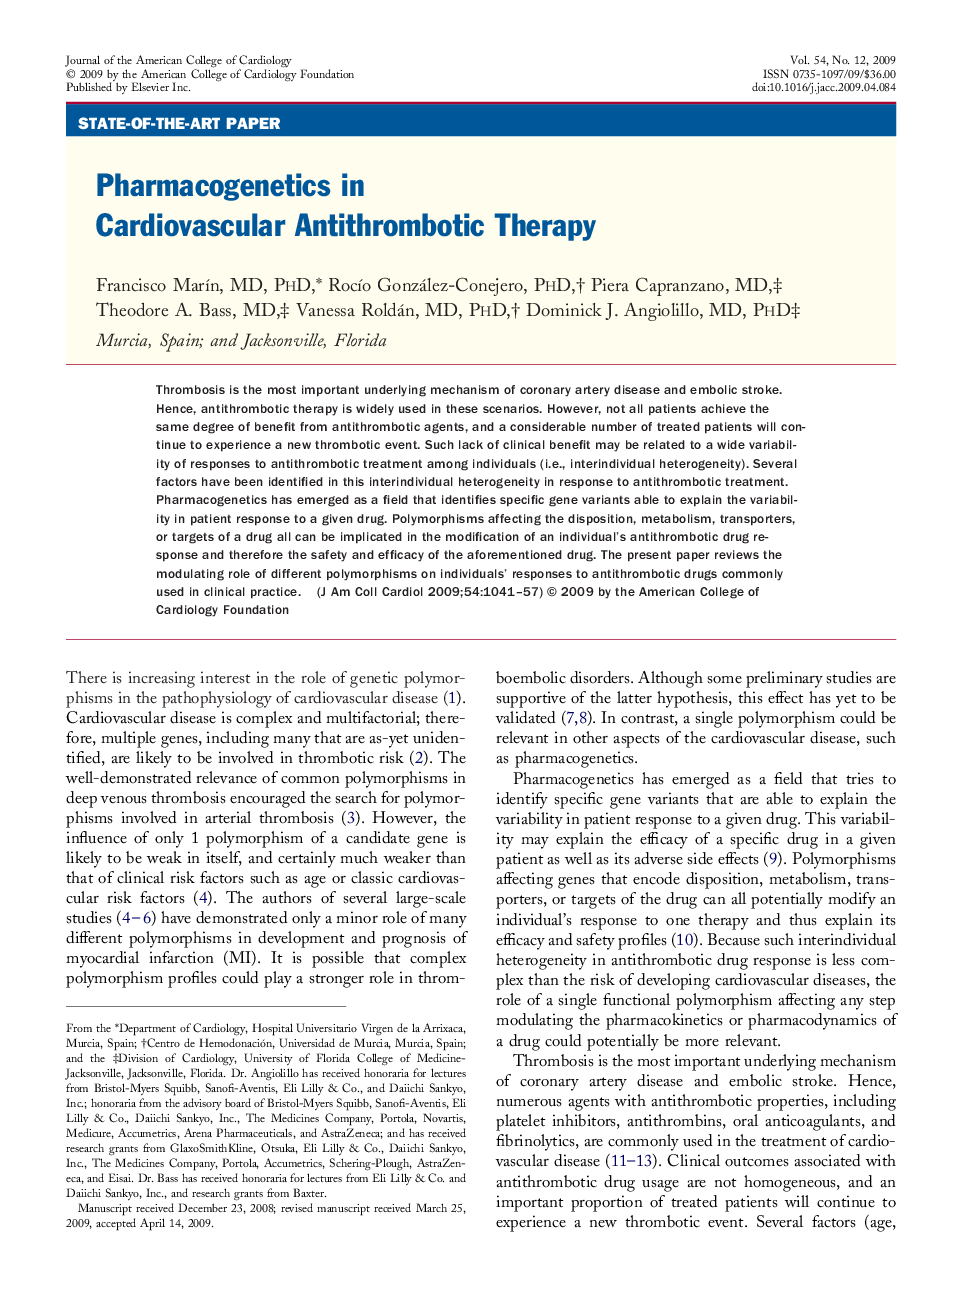 Pharmacogenetics in Cardiovascular Antithrombotic Therapy 